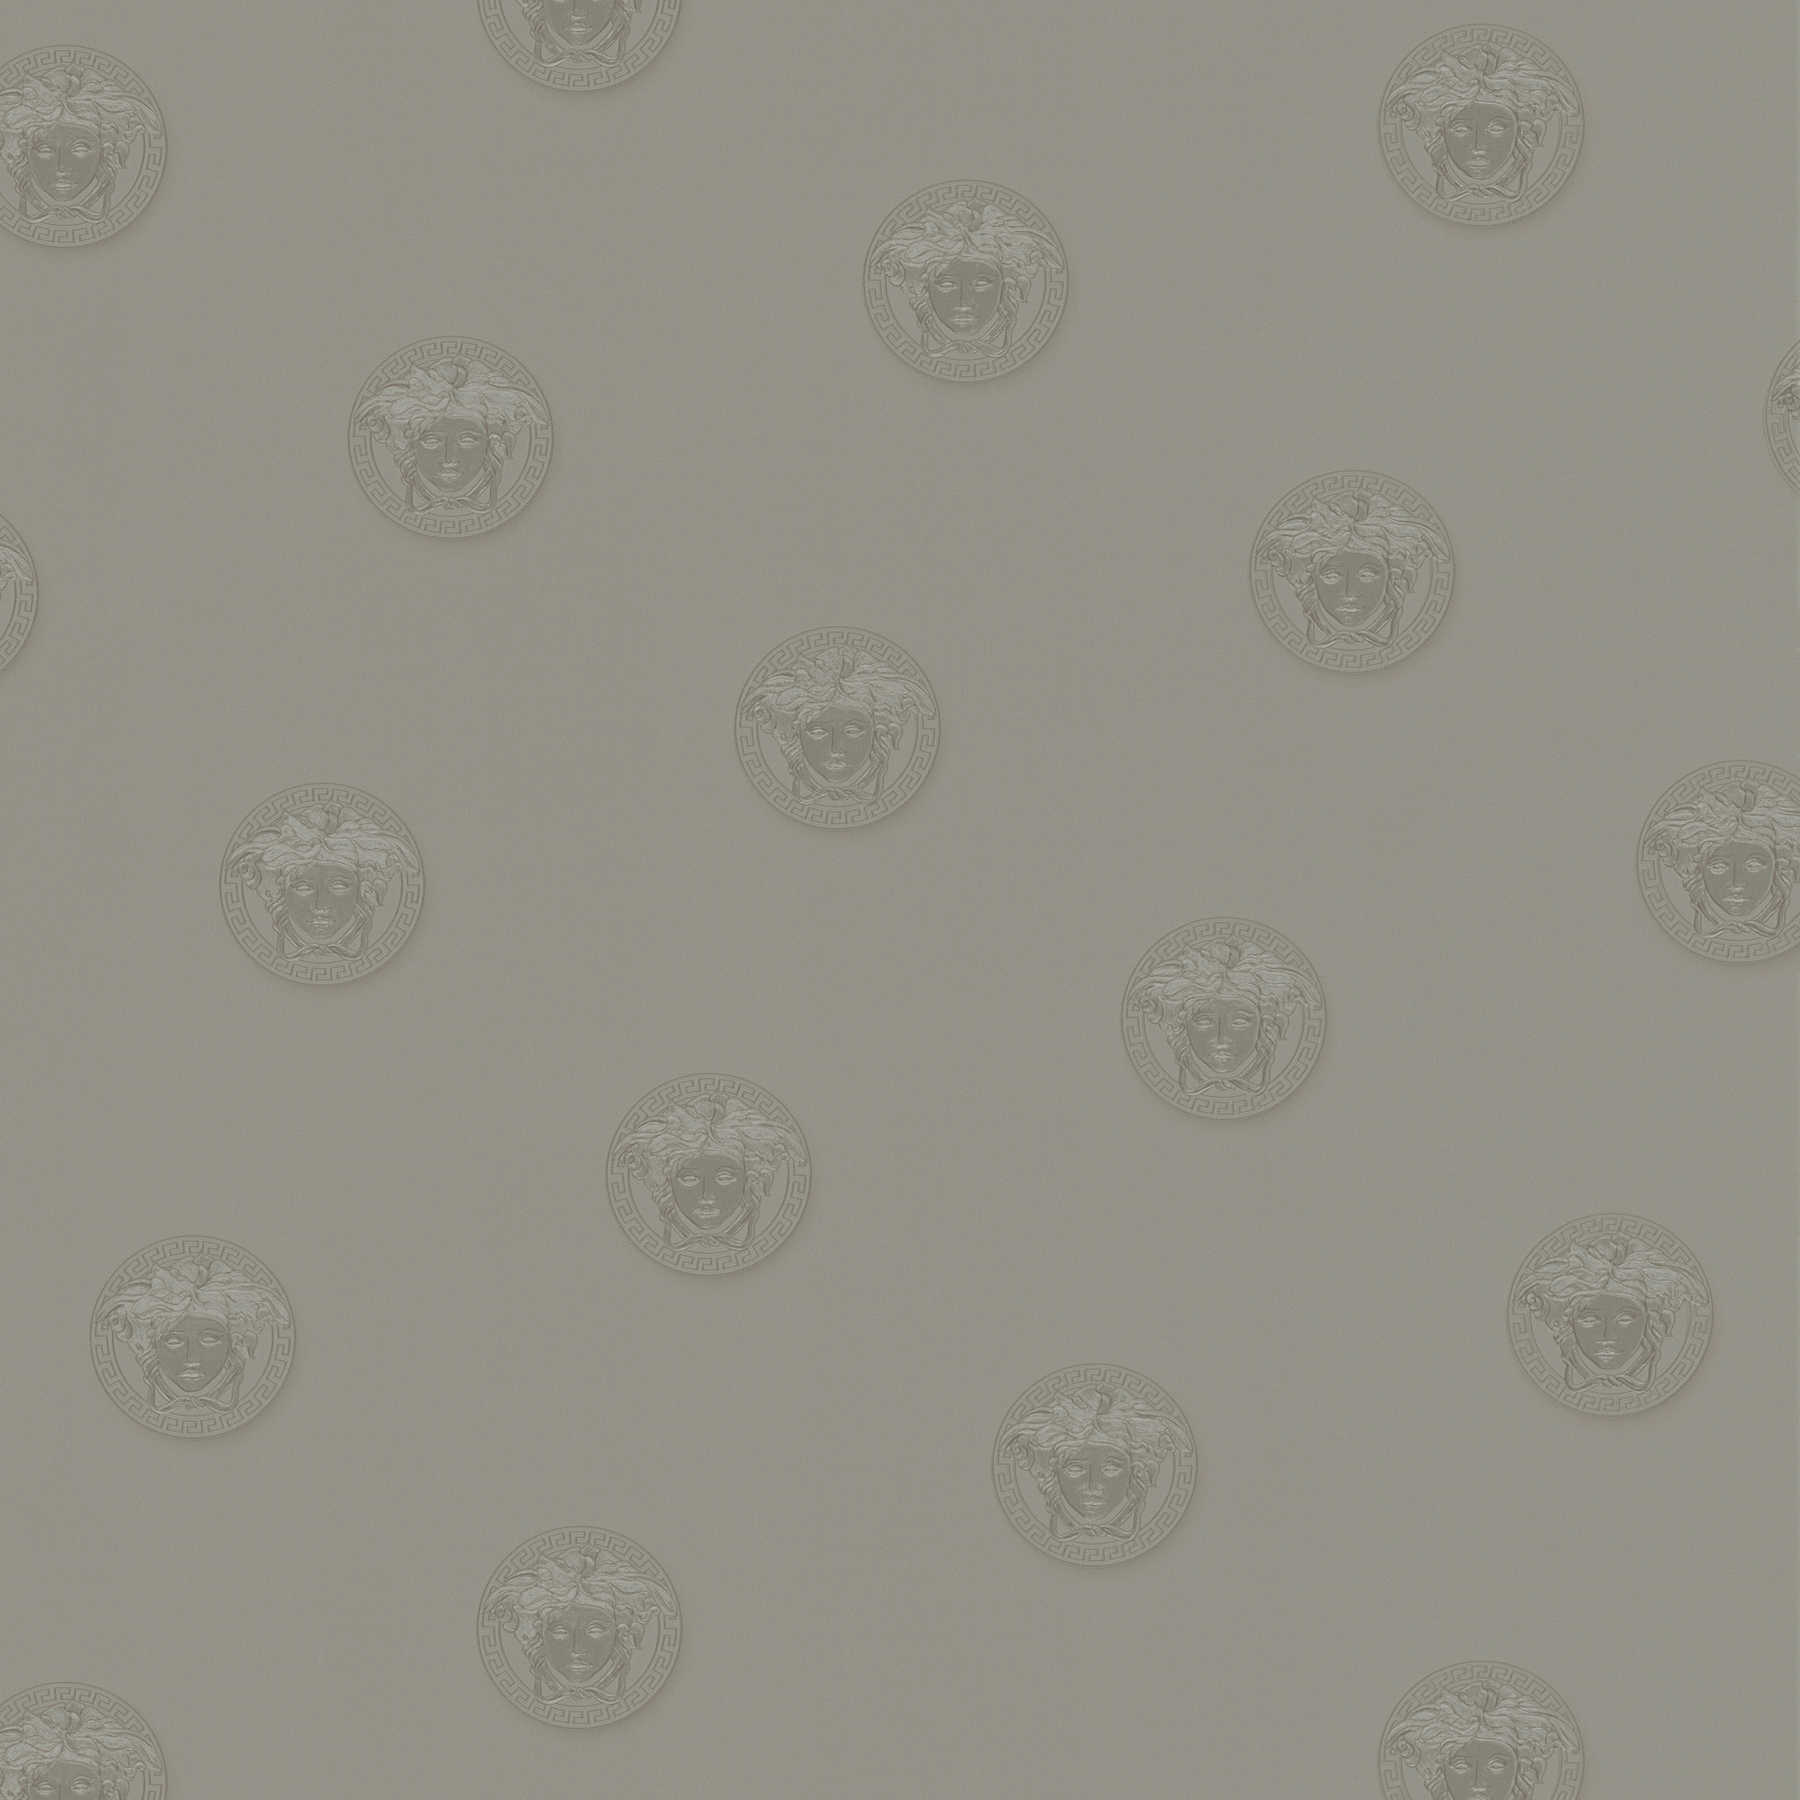 VERSACE wallpaper with Medusa embossed pattern - grey
